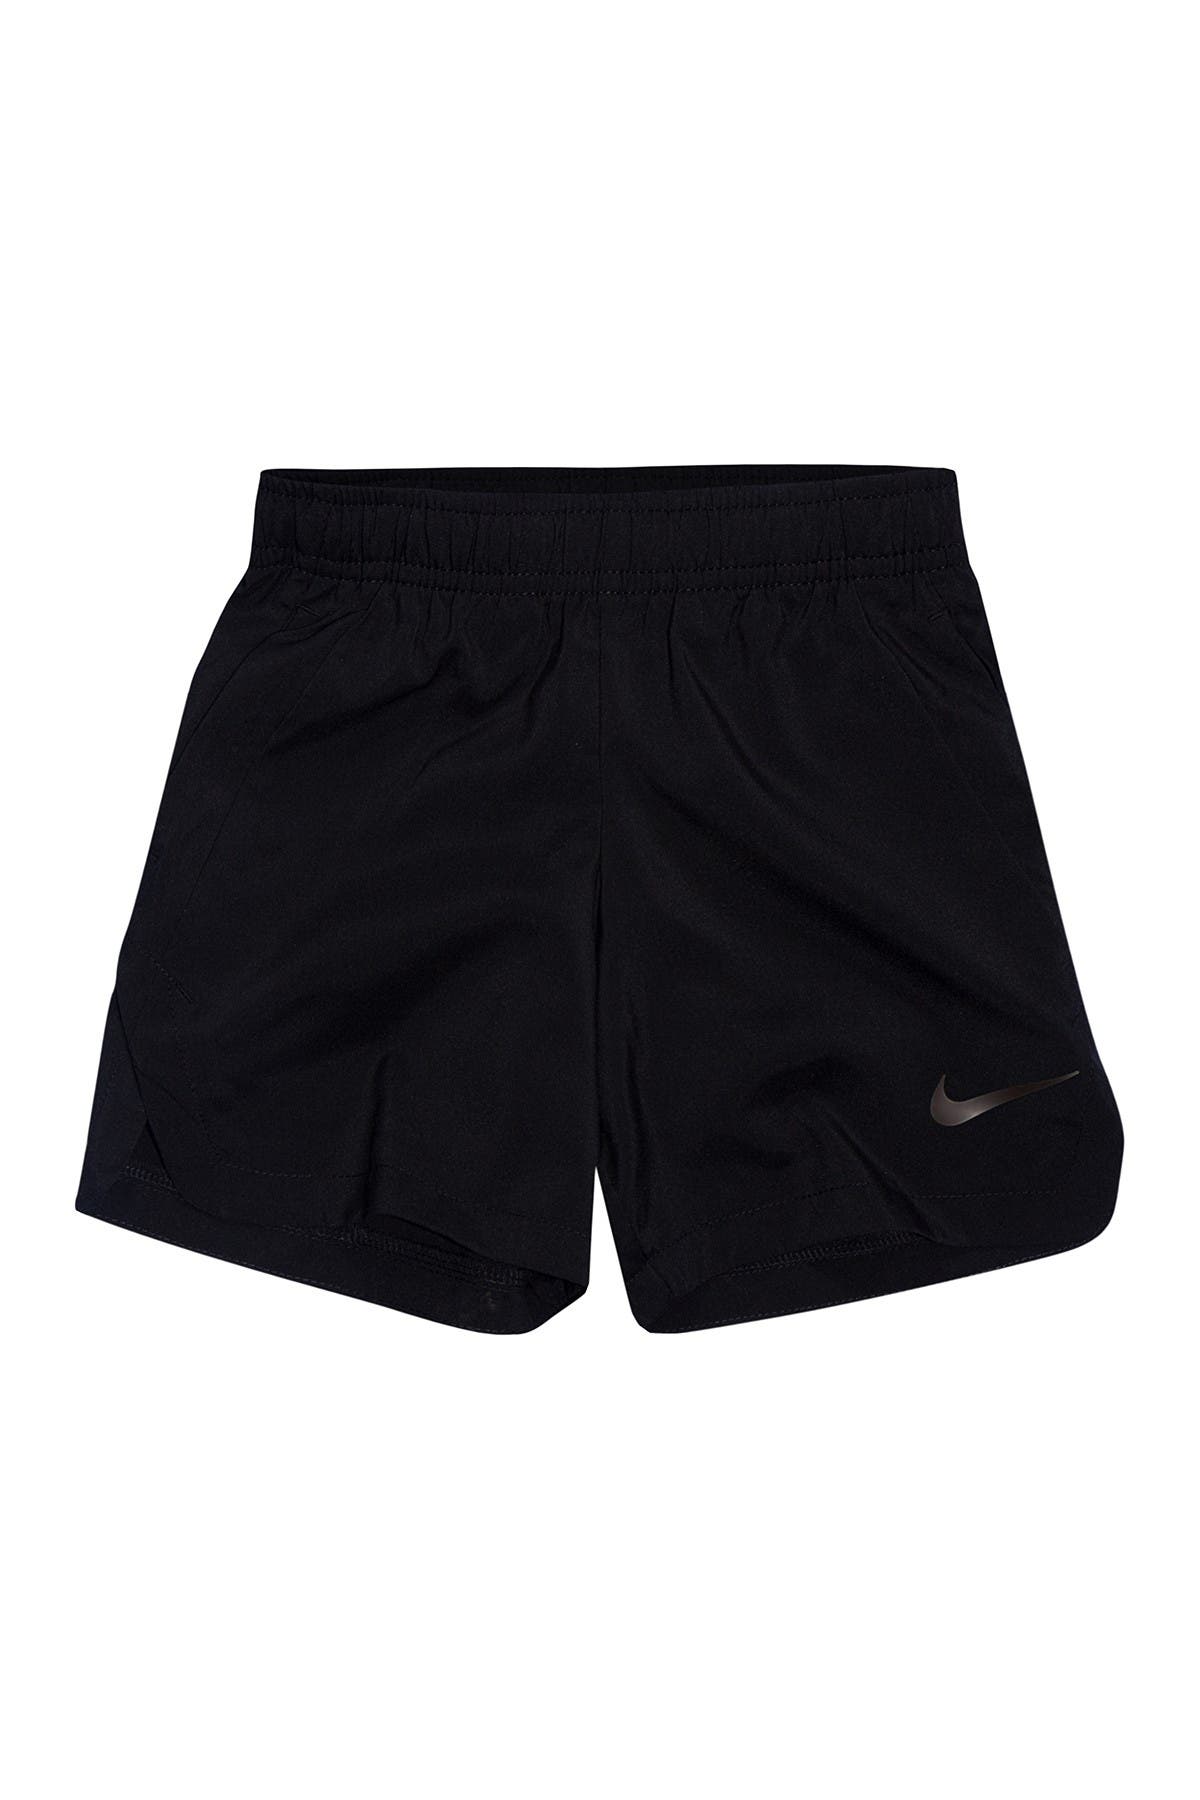 Nike | Dri-FIT Color Change Swoosh Logo 